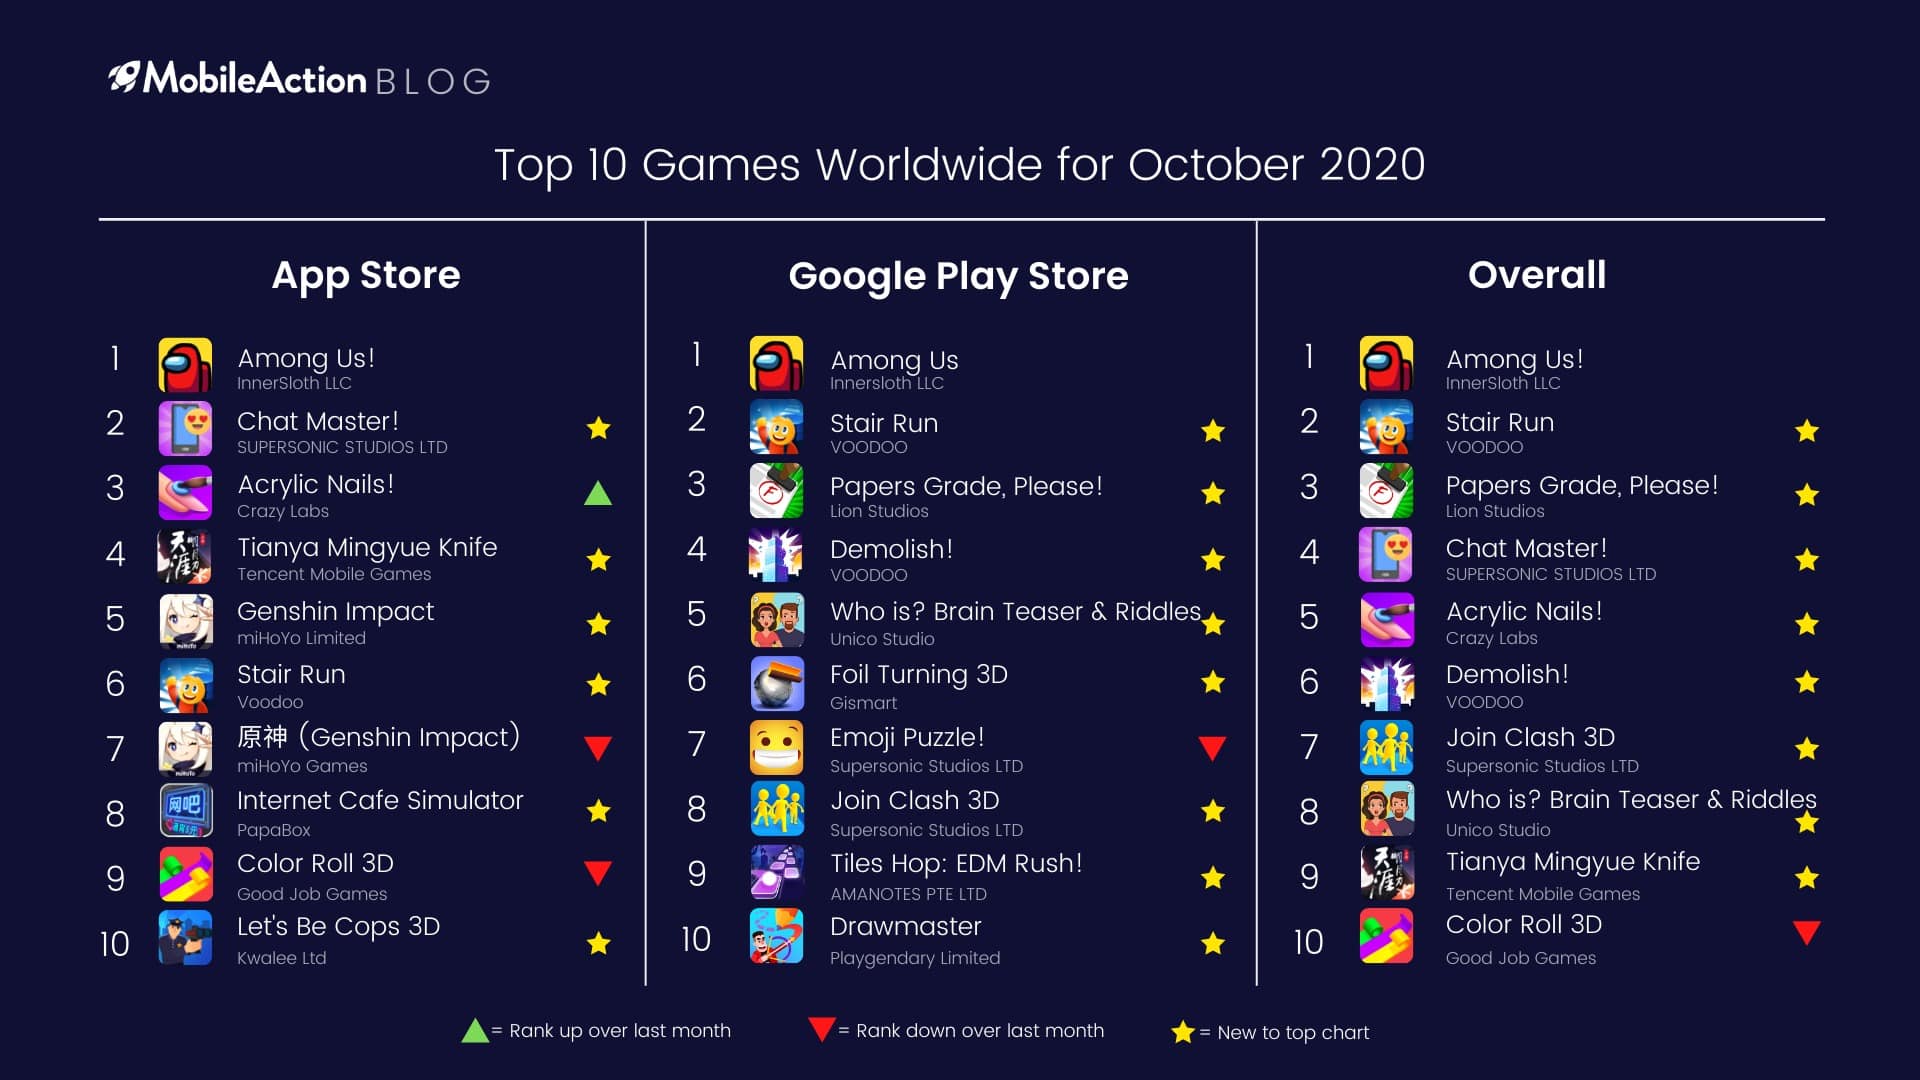 Top 10 Games Worldwide for October 2020